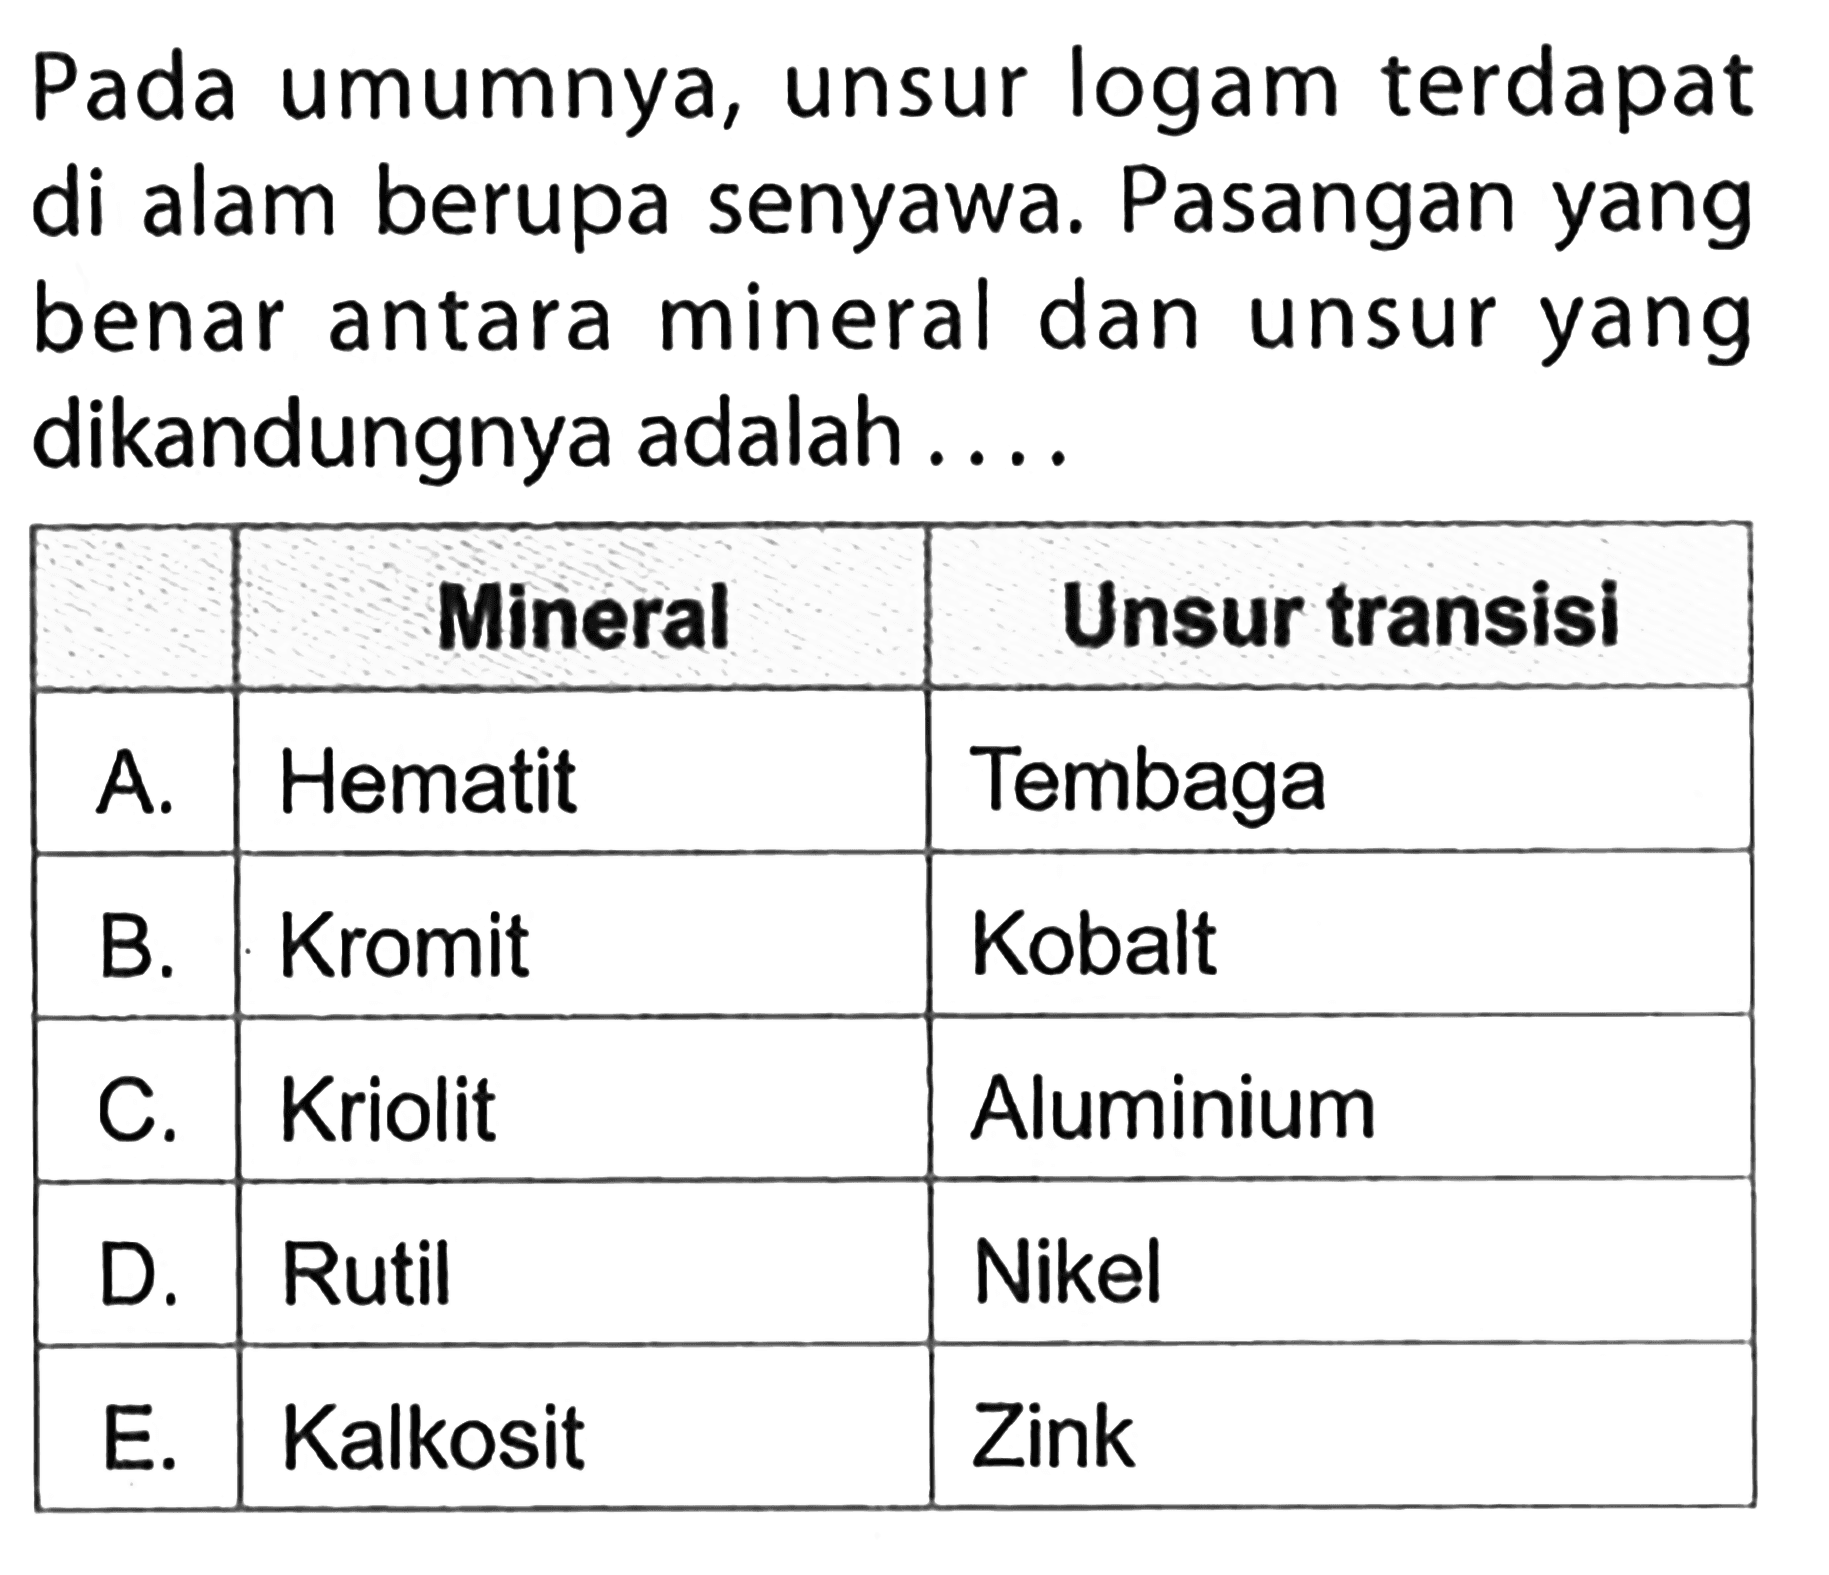 Pada umumnya, unsur logam terdapat di alam berupa senyawa. Pasangan yang benar antara mineral dan unsur yang dikandungnya adalah.... Mineral Unsur transisi A. Hematit Tembaga B. Kromit Kobalt C. Kriolit Aluminium D. Rutil Nikel E. Kalkosit Zink